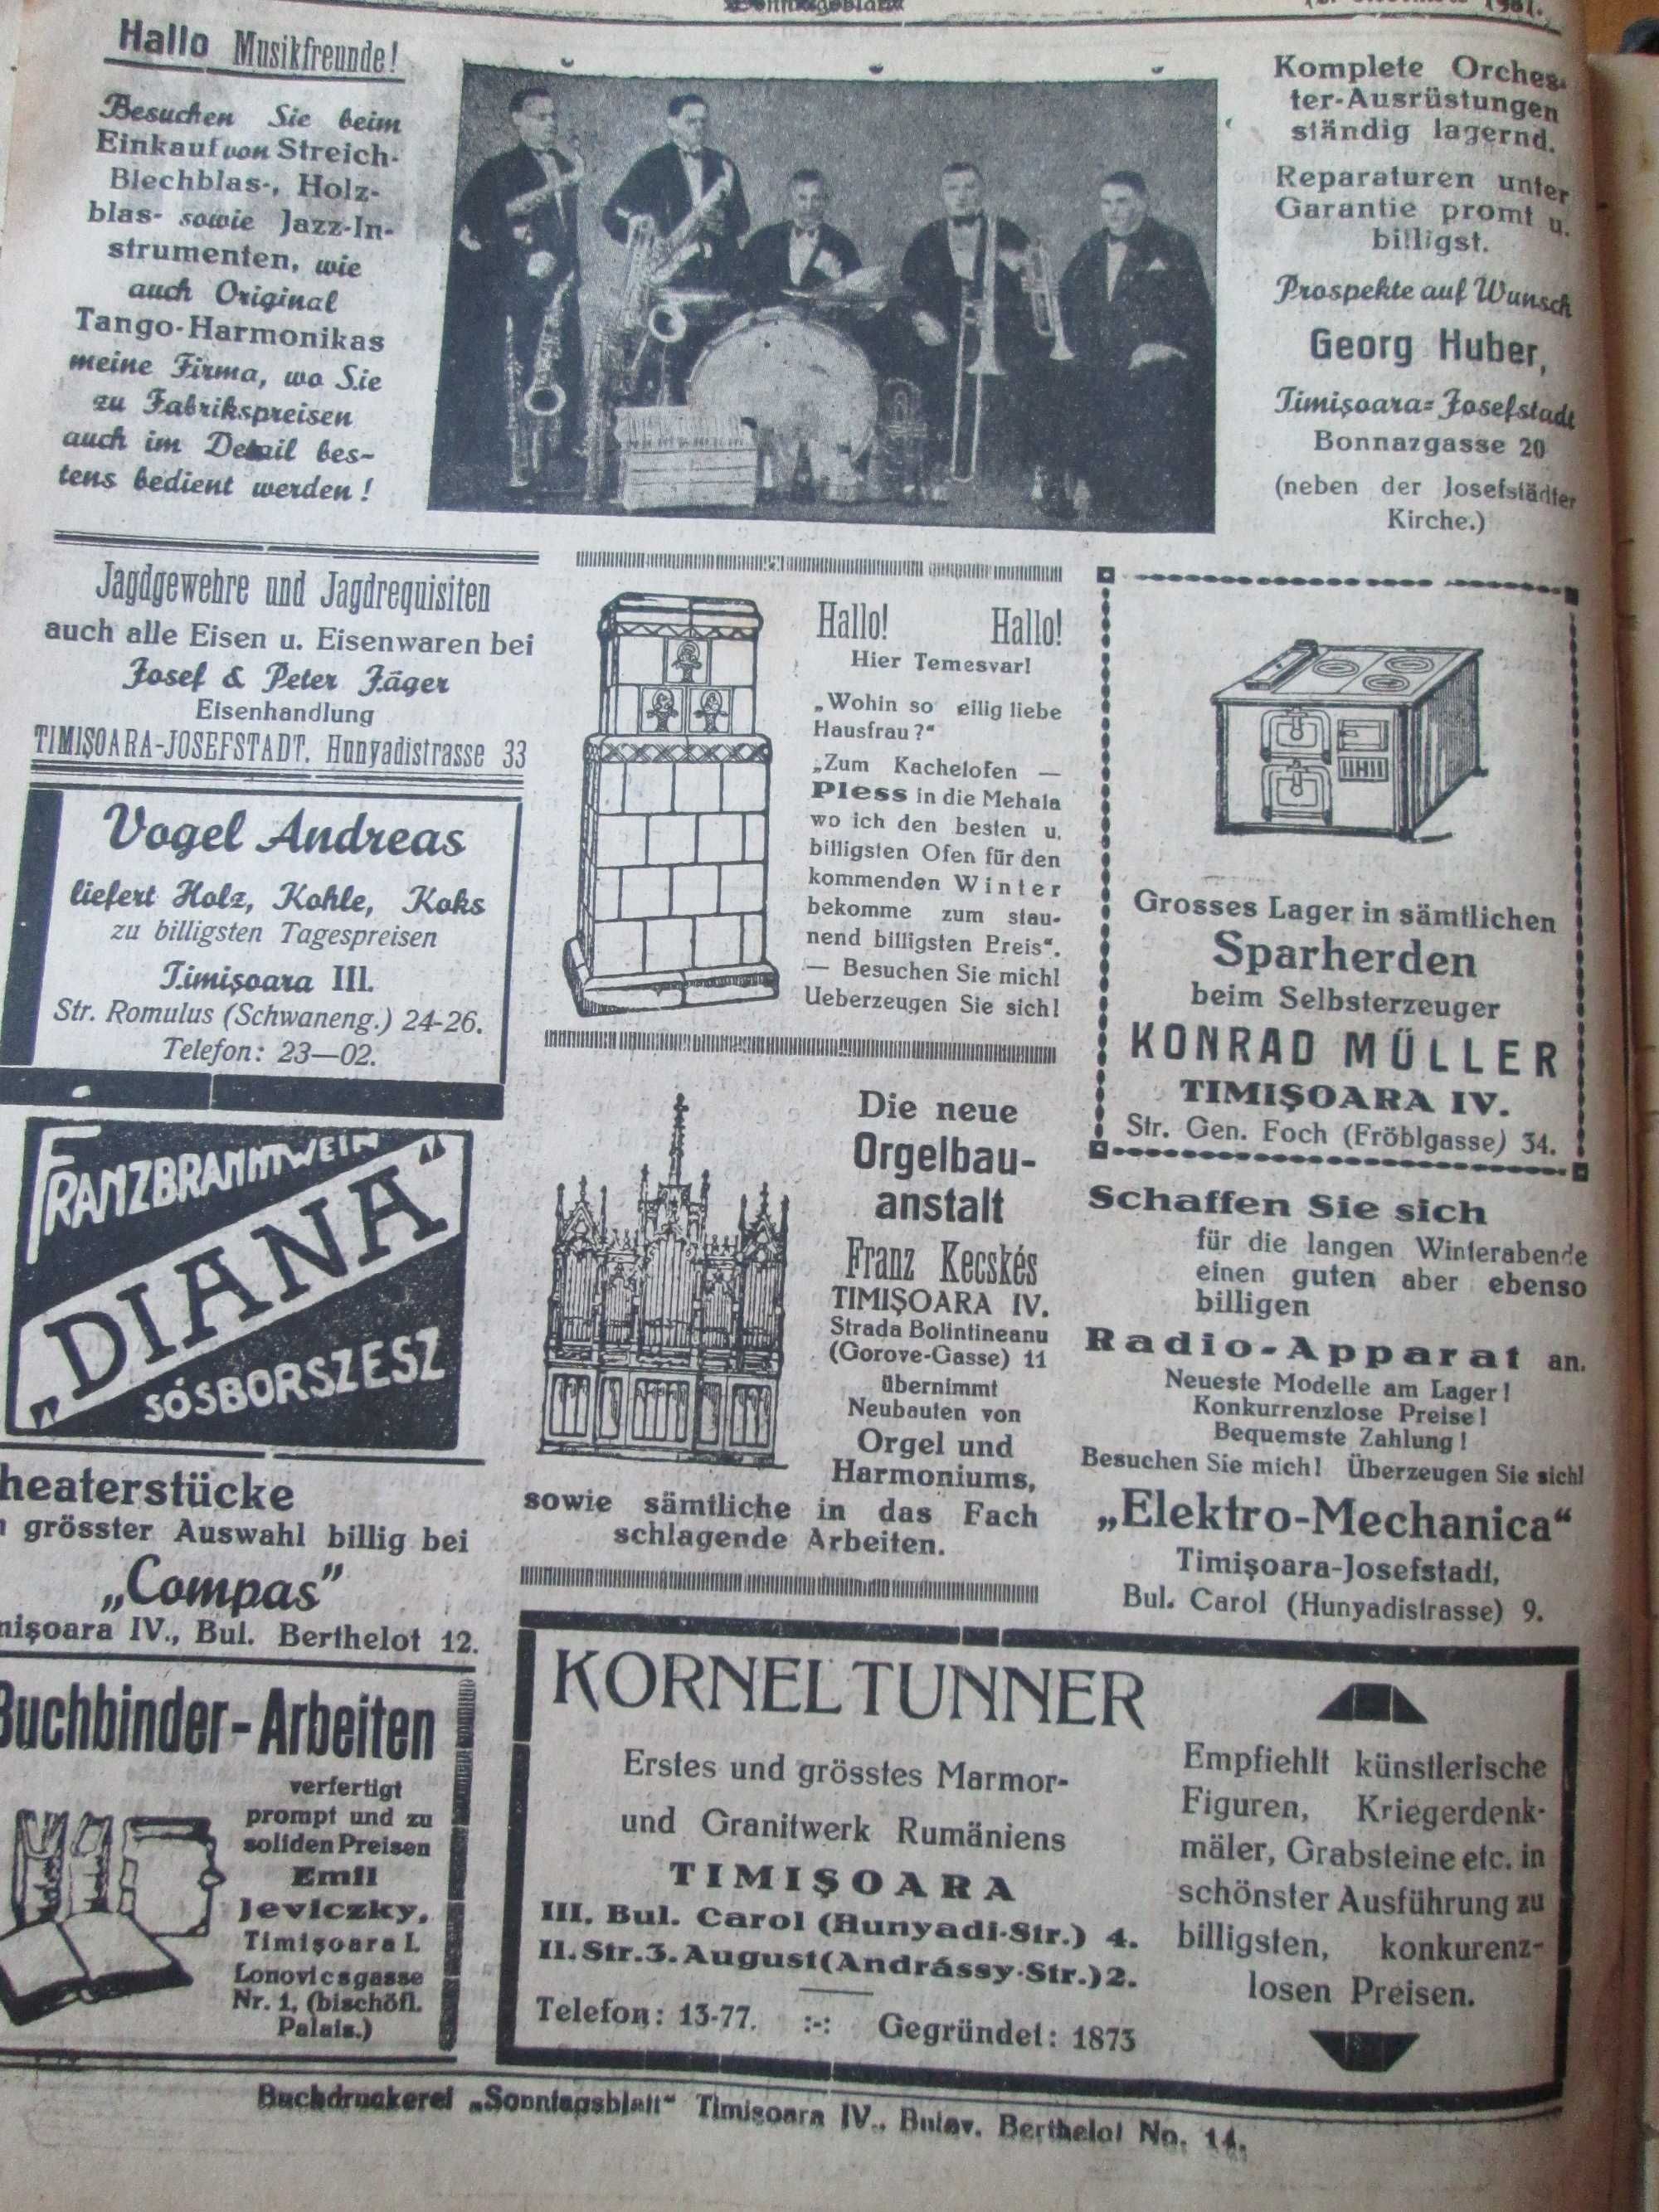 Ziare vechi, Timisoara, Temesvar: Sonntagsblatt, nr. 1-26 1939-1940